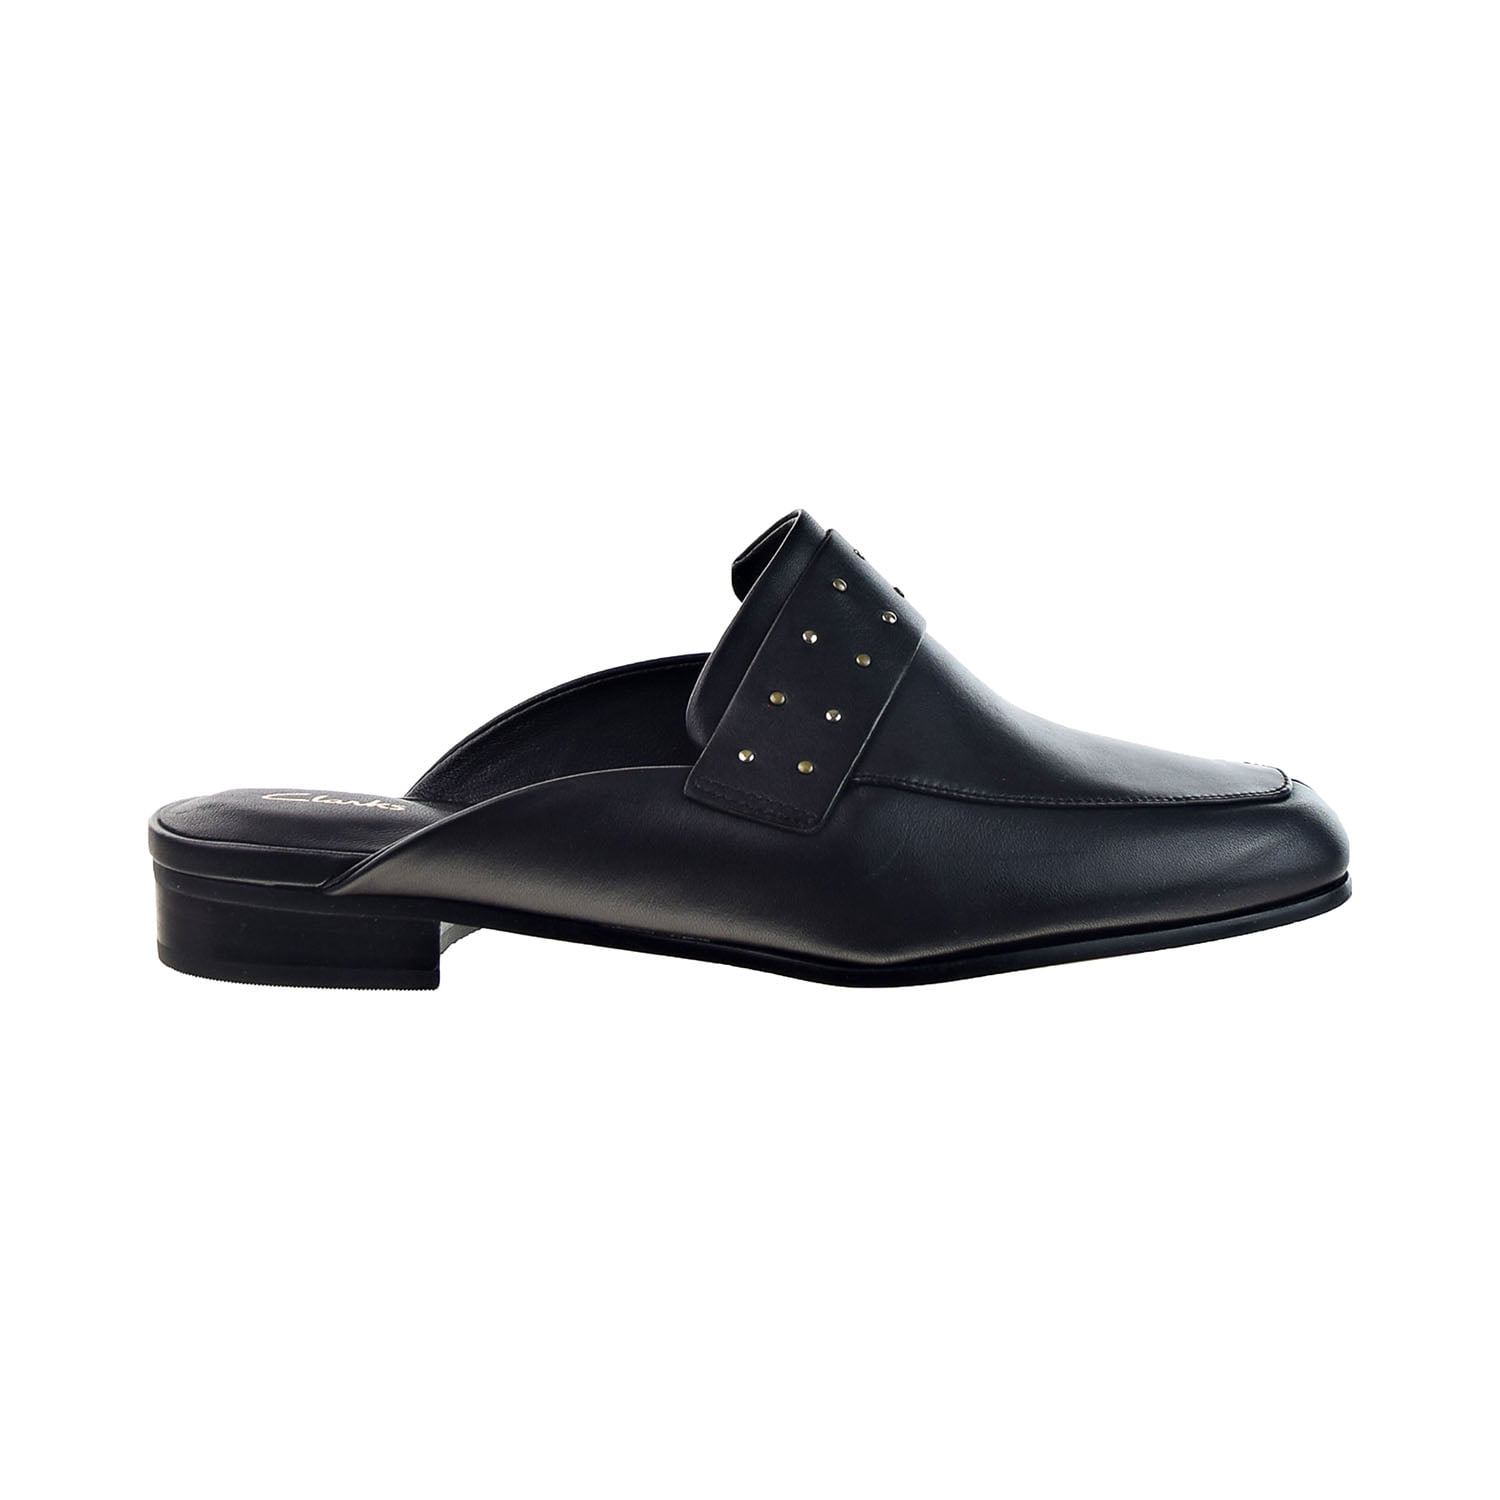 Clarks - Clarks Pure Mule Women's Slip-on Dress Shoes Black Leather ...